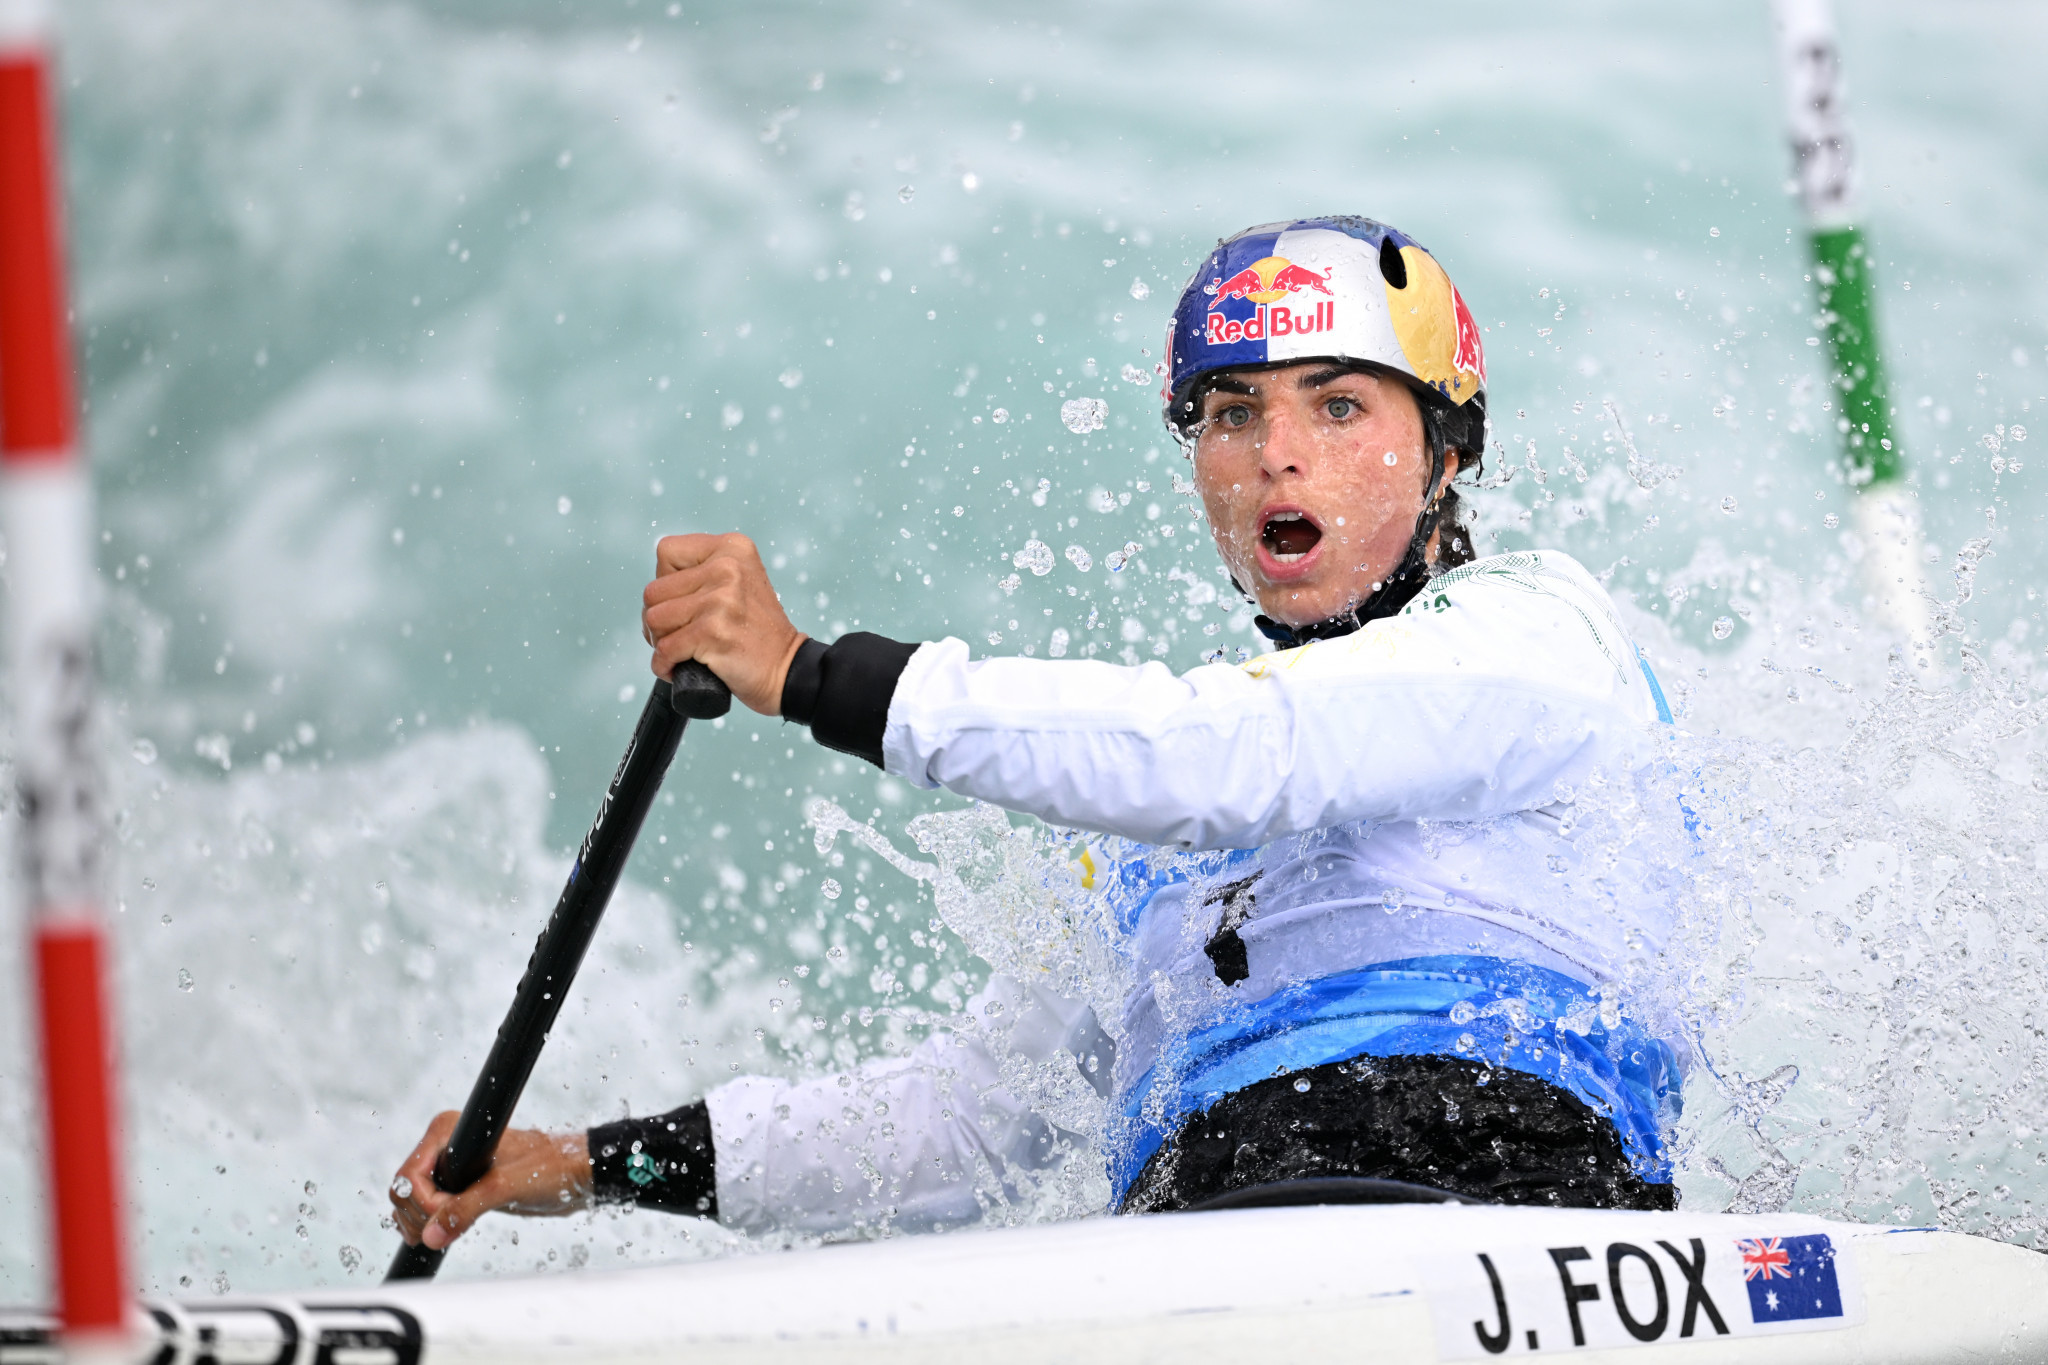 Olympic champion Fox has to work hard to progress through ICF Canoe Slalom World Championships heat